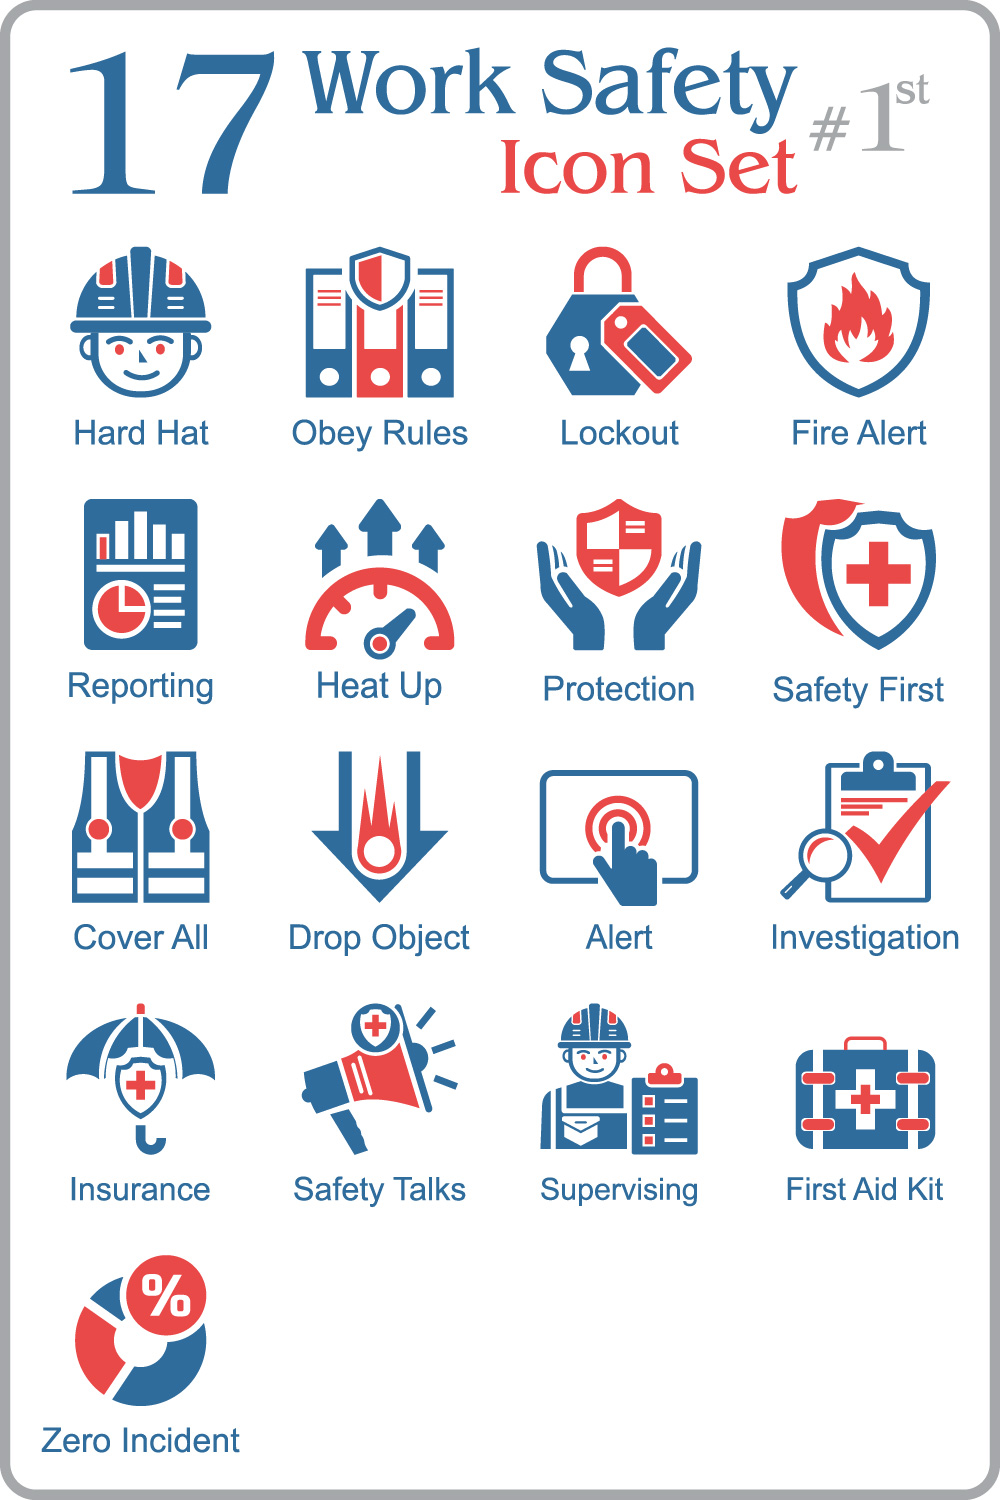 Work Safety Icon Set pinterest image.